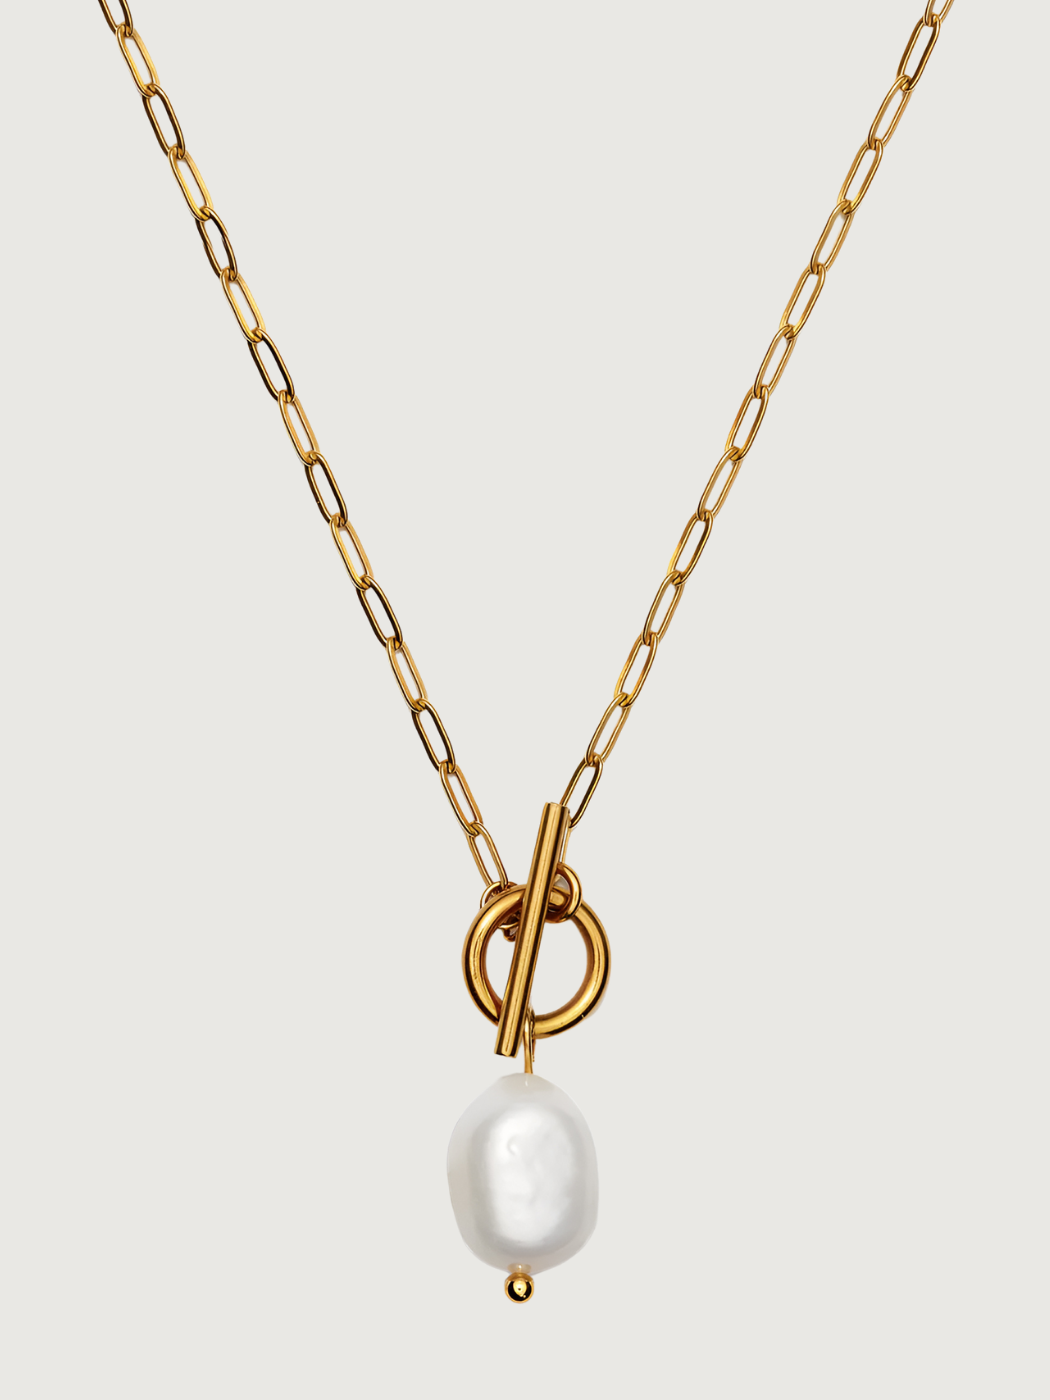 Tiffany South Sea pearl pendant in 18k gold with diamonds.